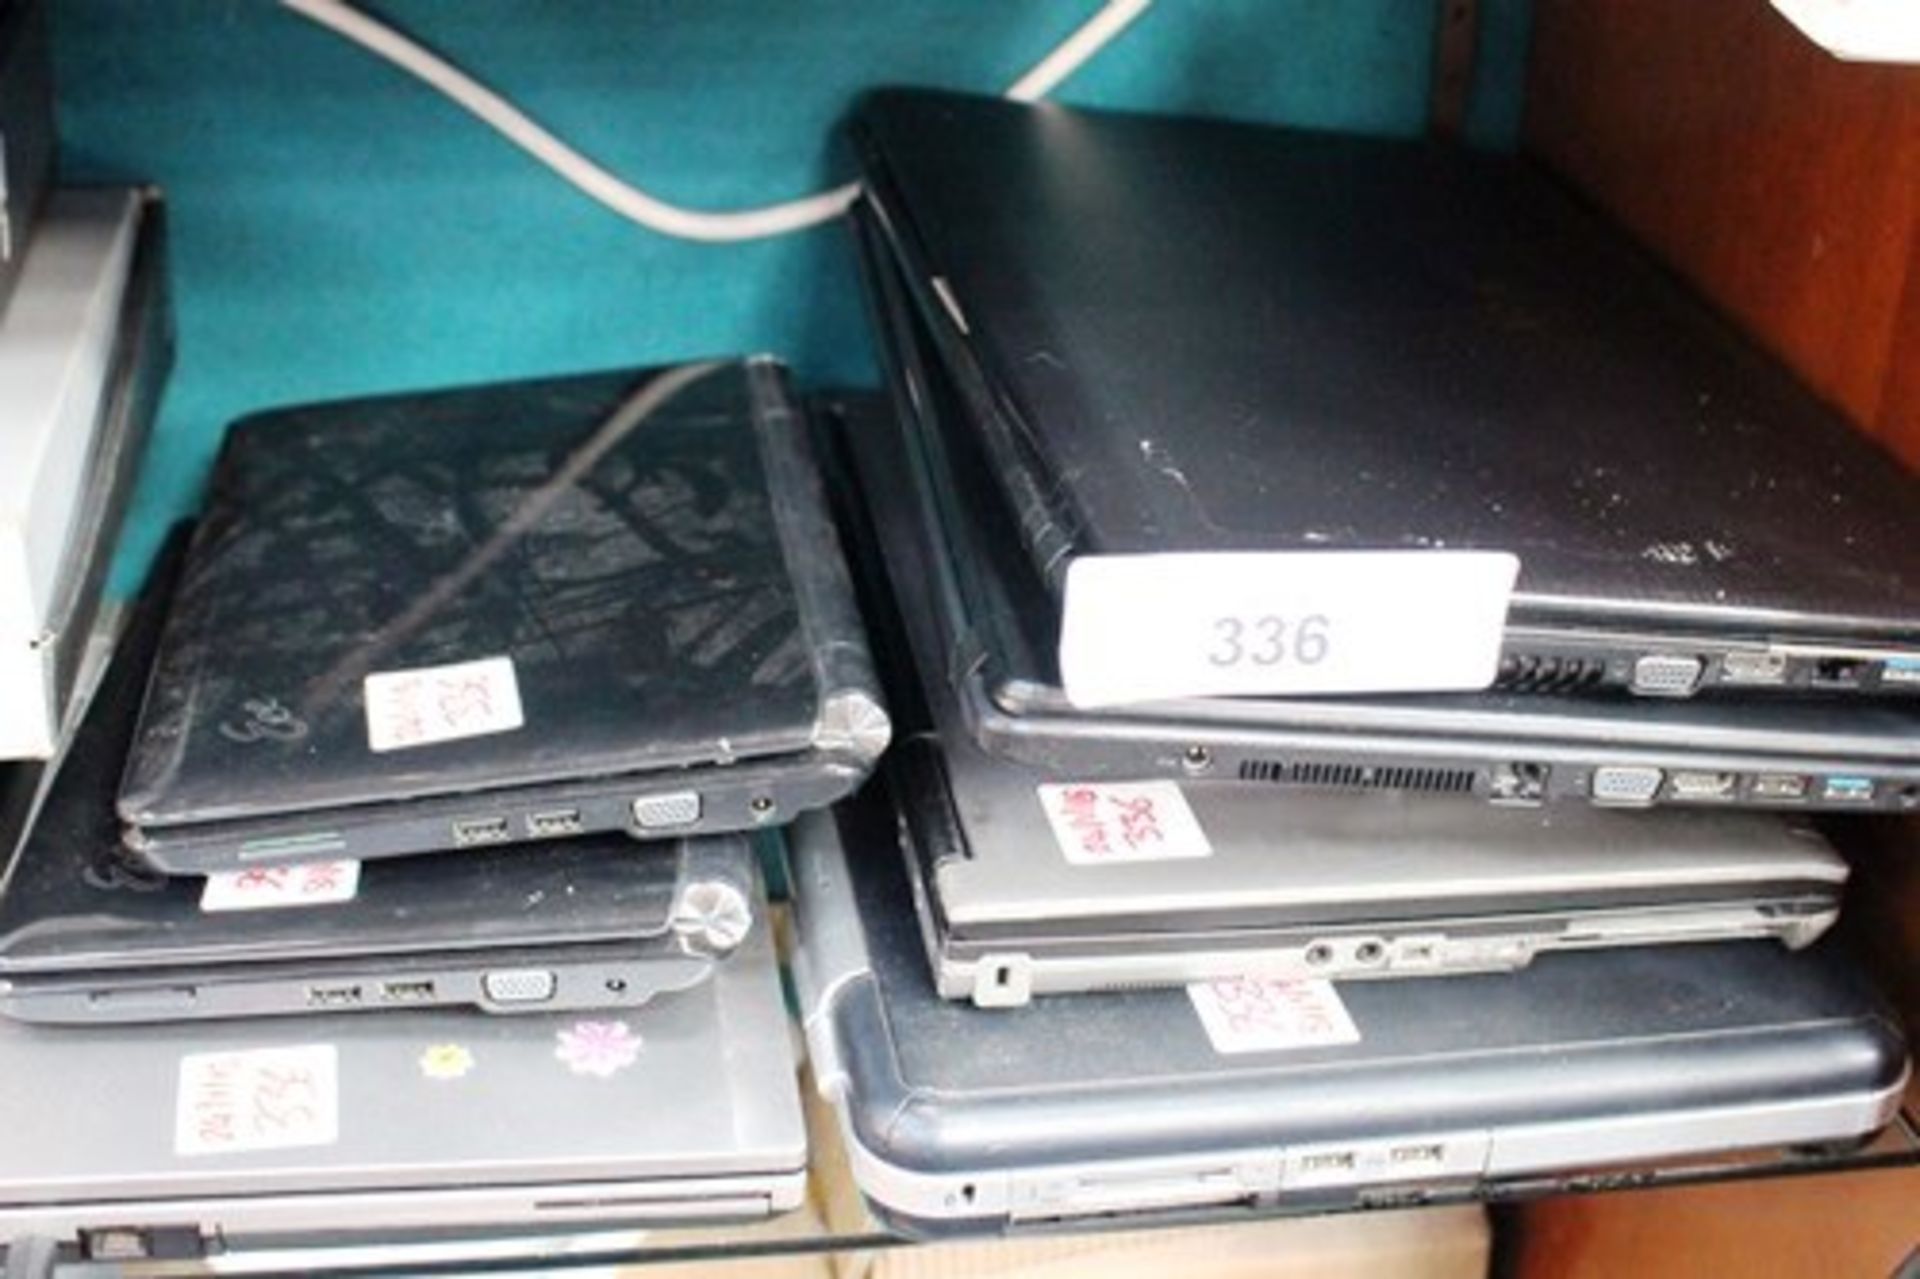 8 x Used laptops, including HP Elite book, EEE, Sony vaio etc - Used, untested (C3)